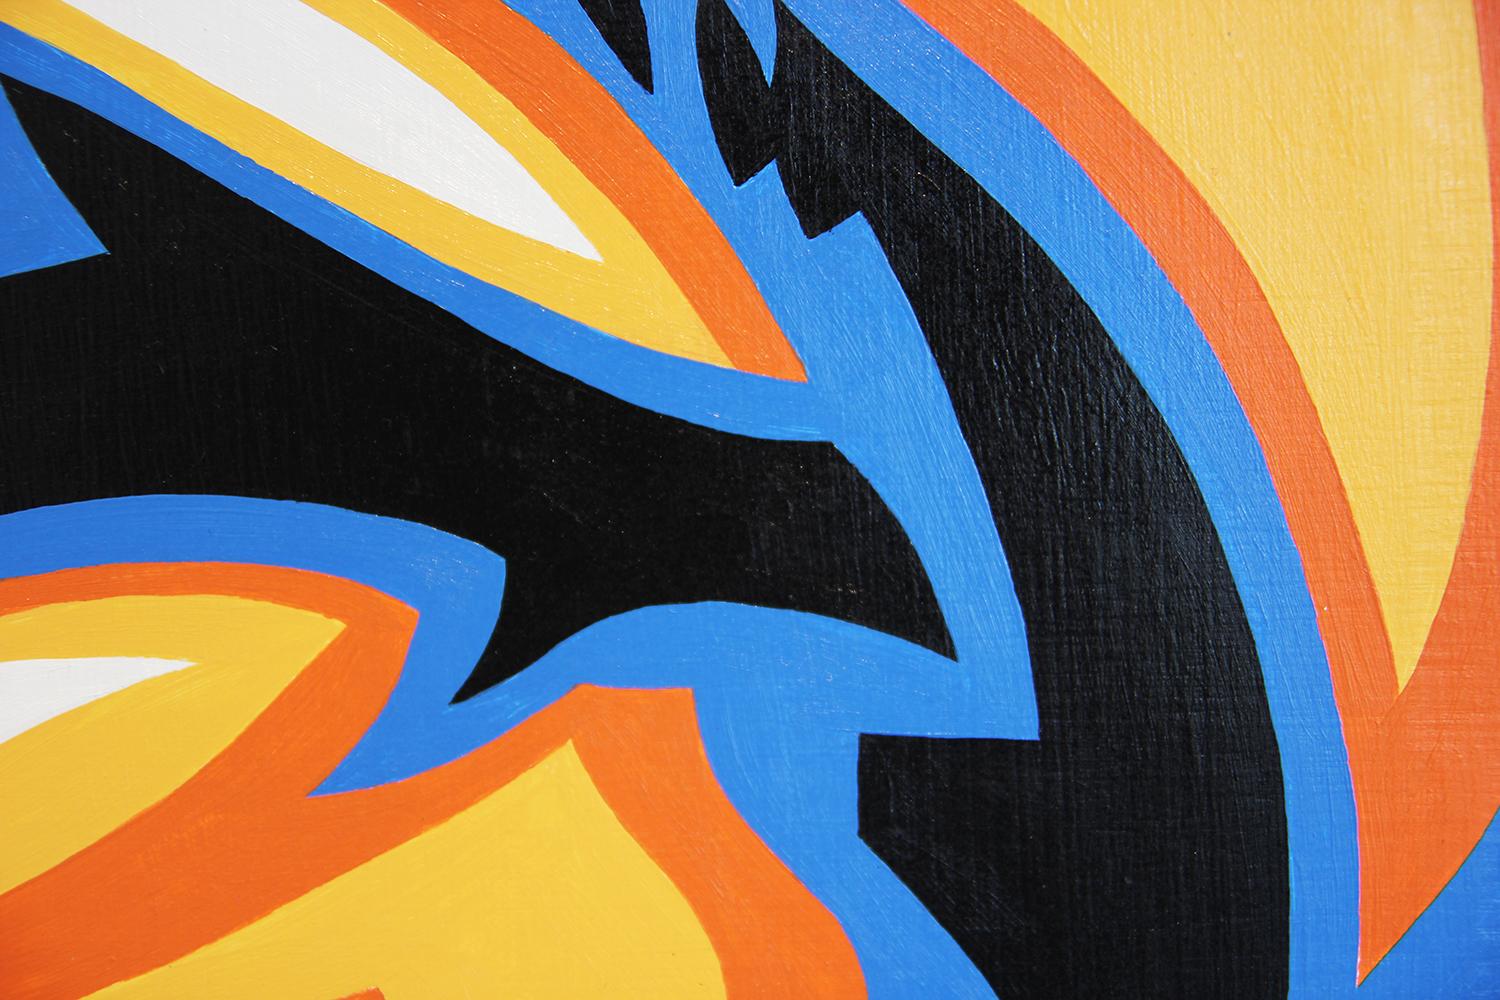 Chadwick Boseman “Black Panther” Teal, Blue, Orange, and Yellow Modern Portrait 1